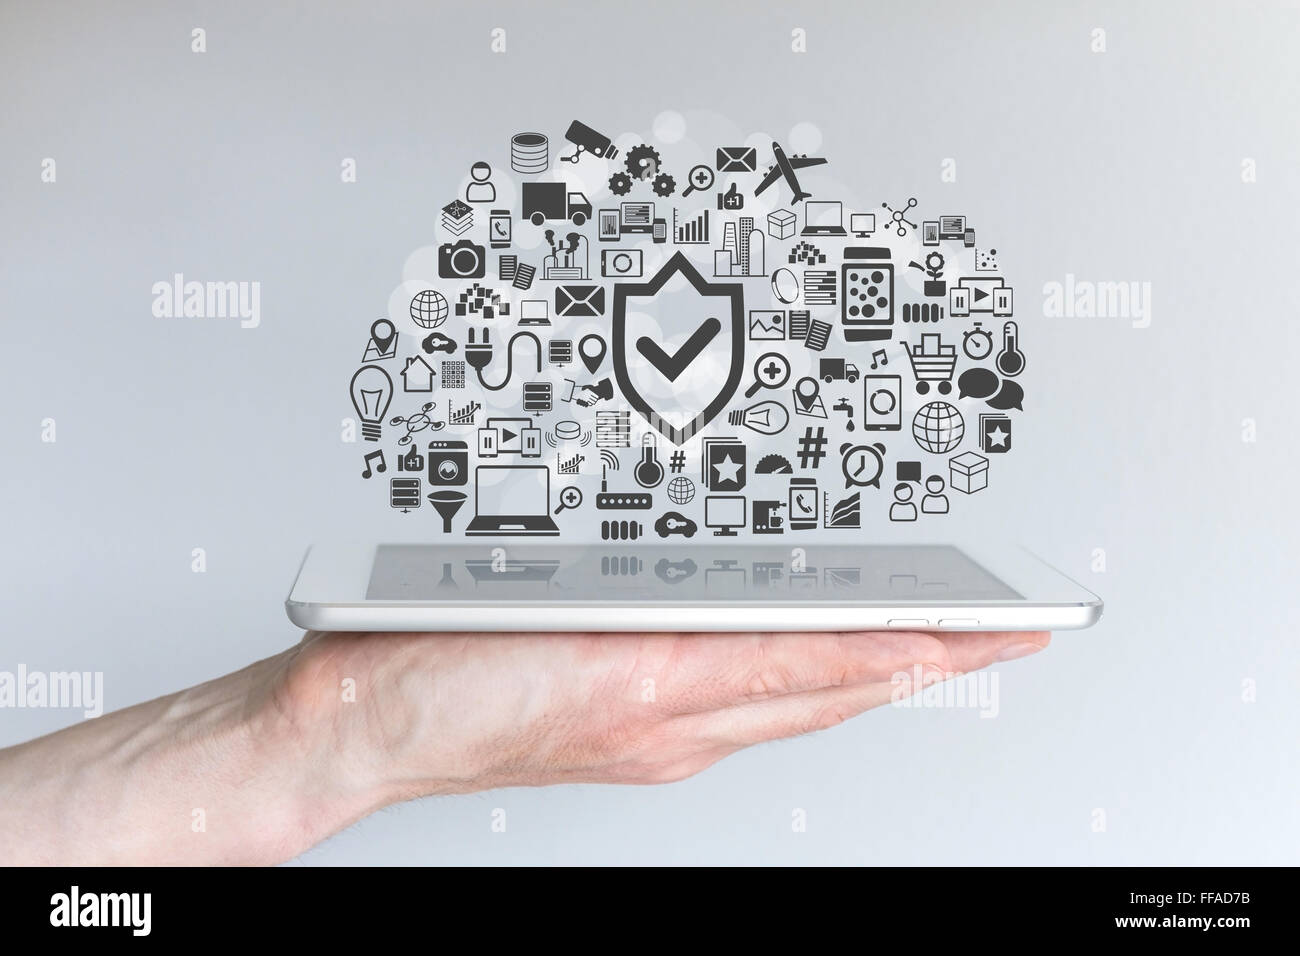 Cloud computing security concept avec homme hand holding tablet Banque D'Images